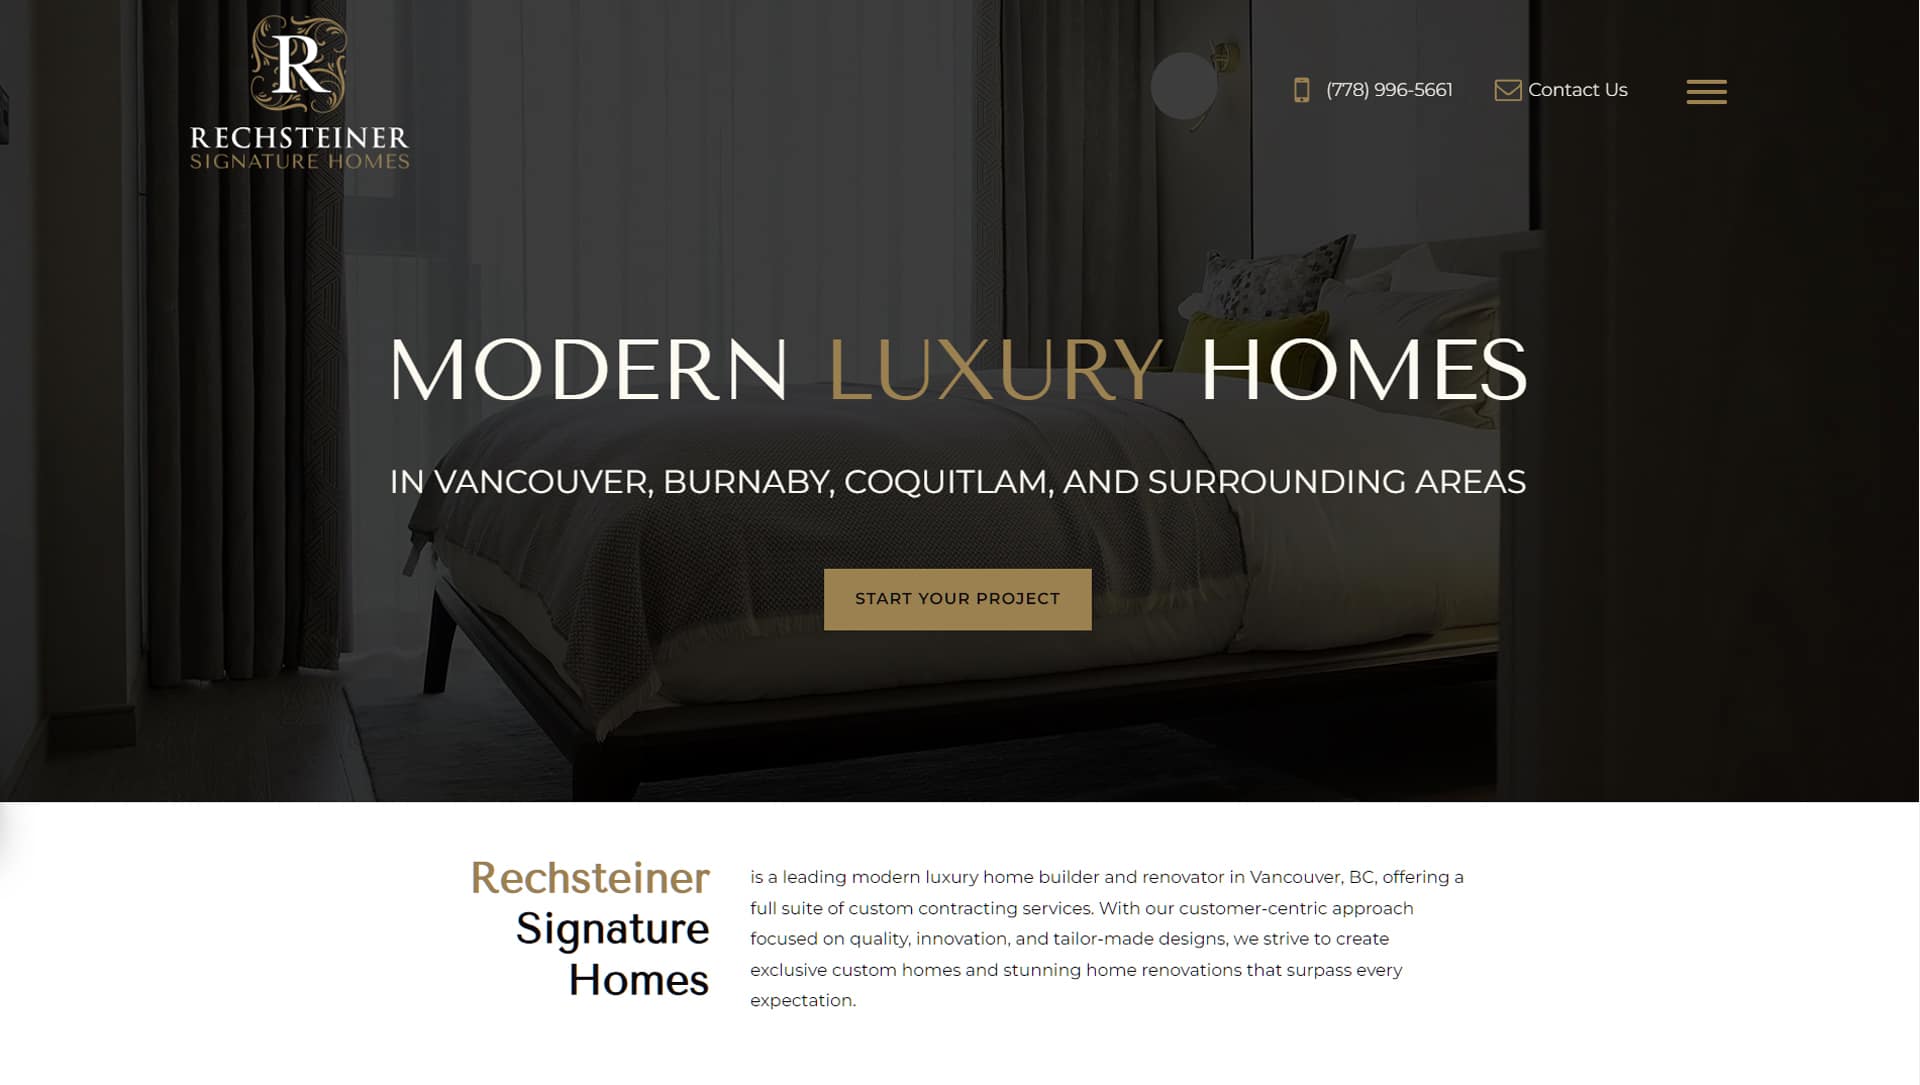 Rechsteiner-Signature-Homes-New-Website-Blue-Ocean-Interactive-Marketing